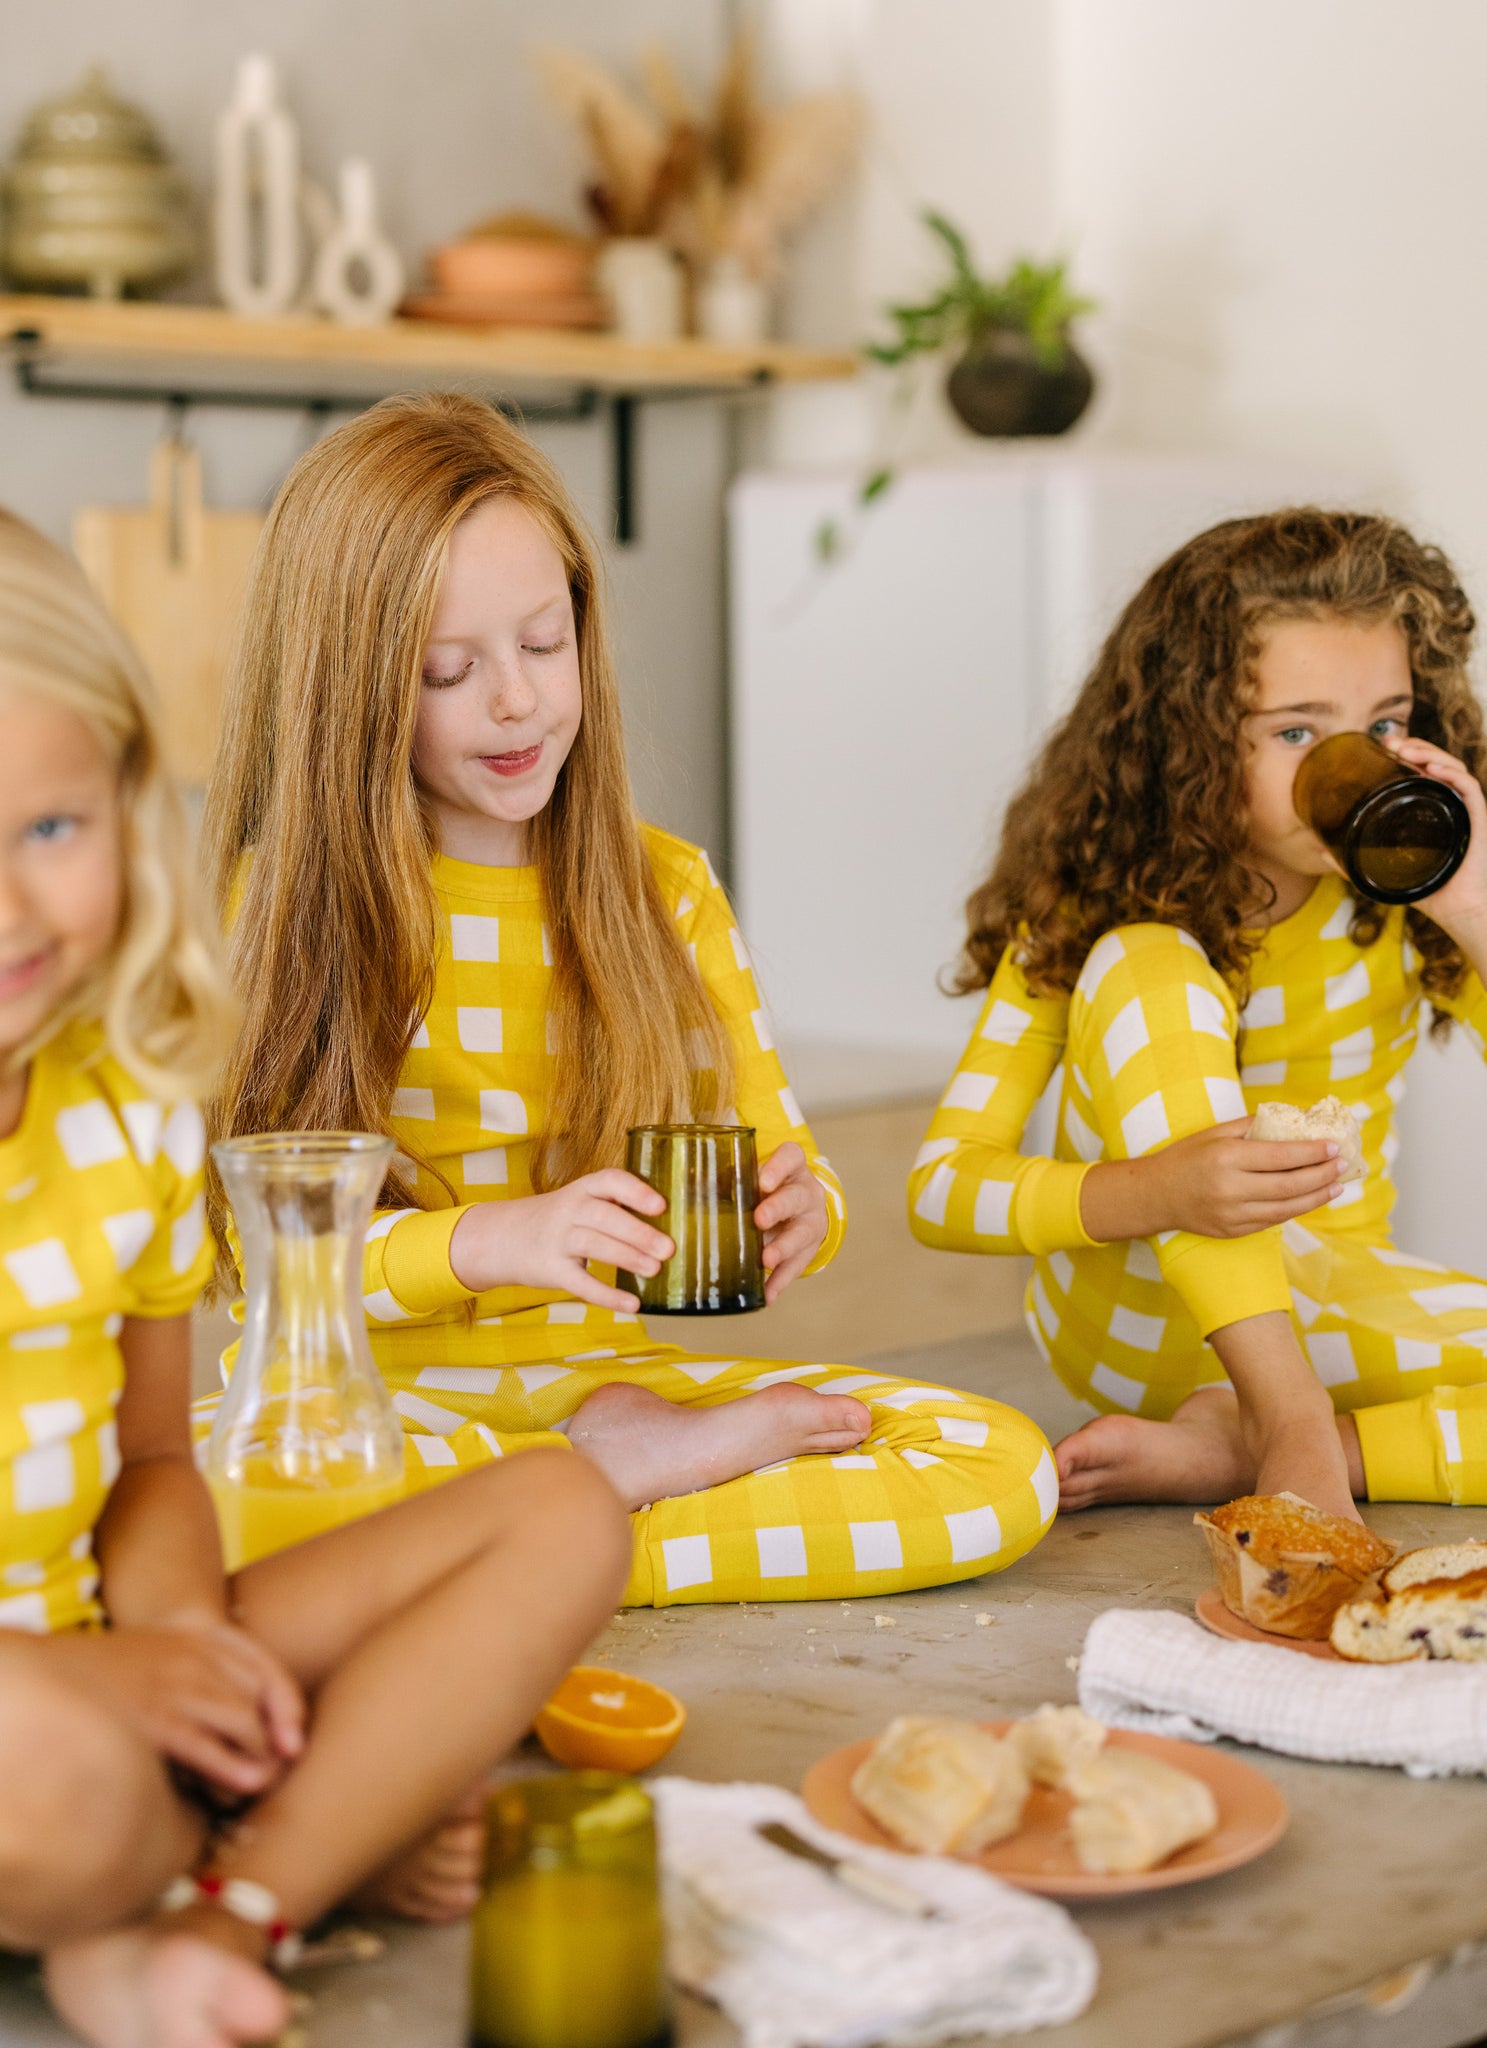 soft, yellow gingham kids pajama sets worn by three girls drinking orange juice and eating breakfast